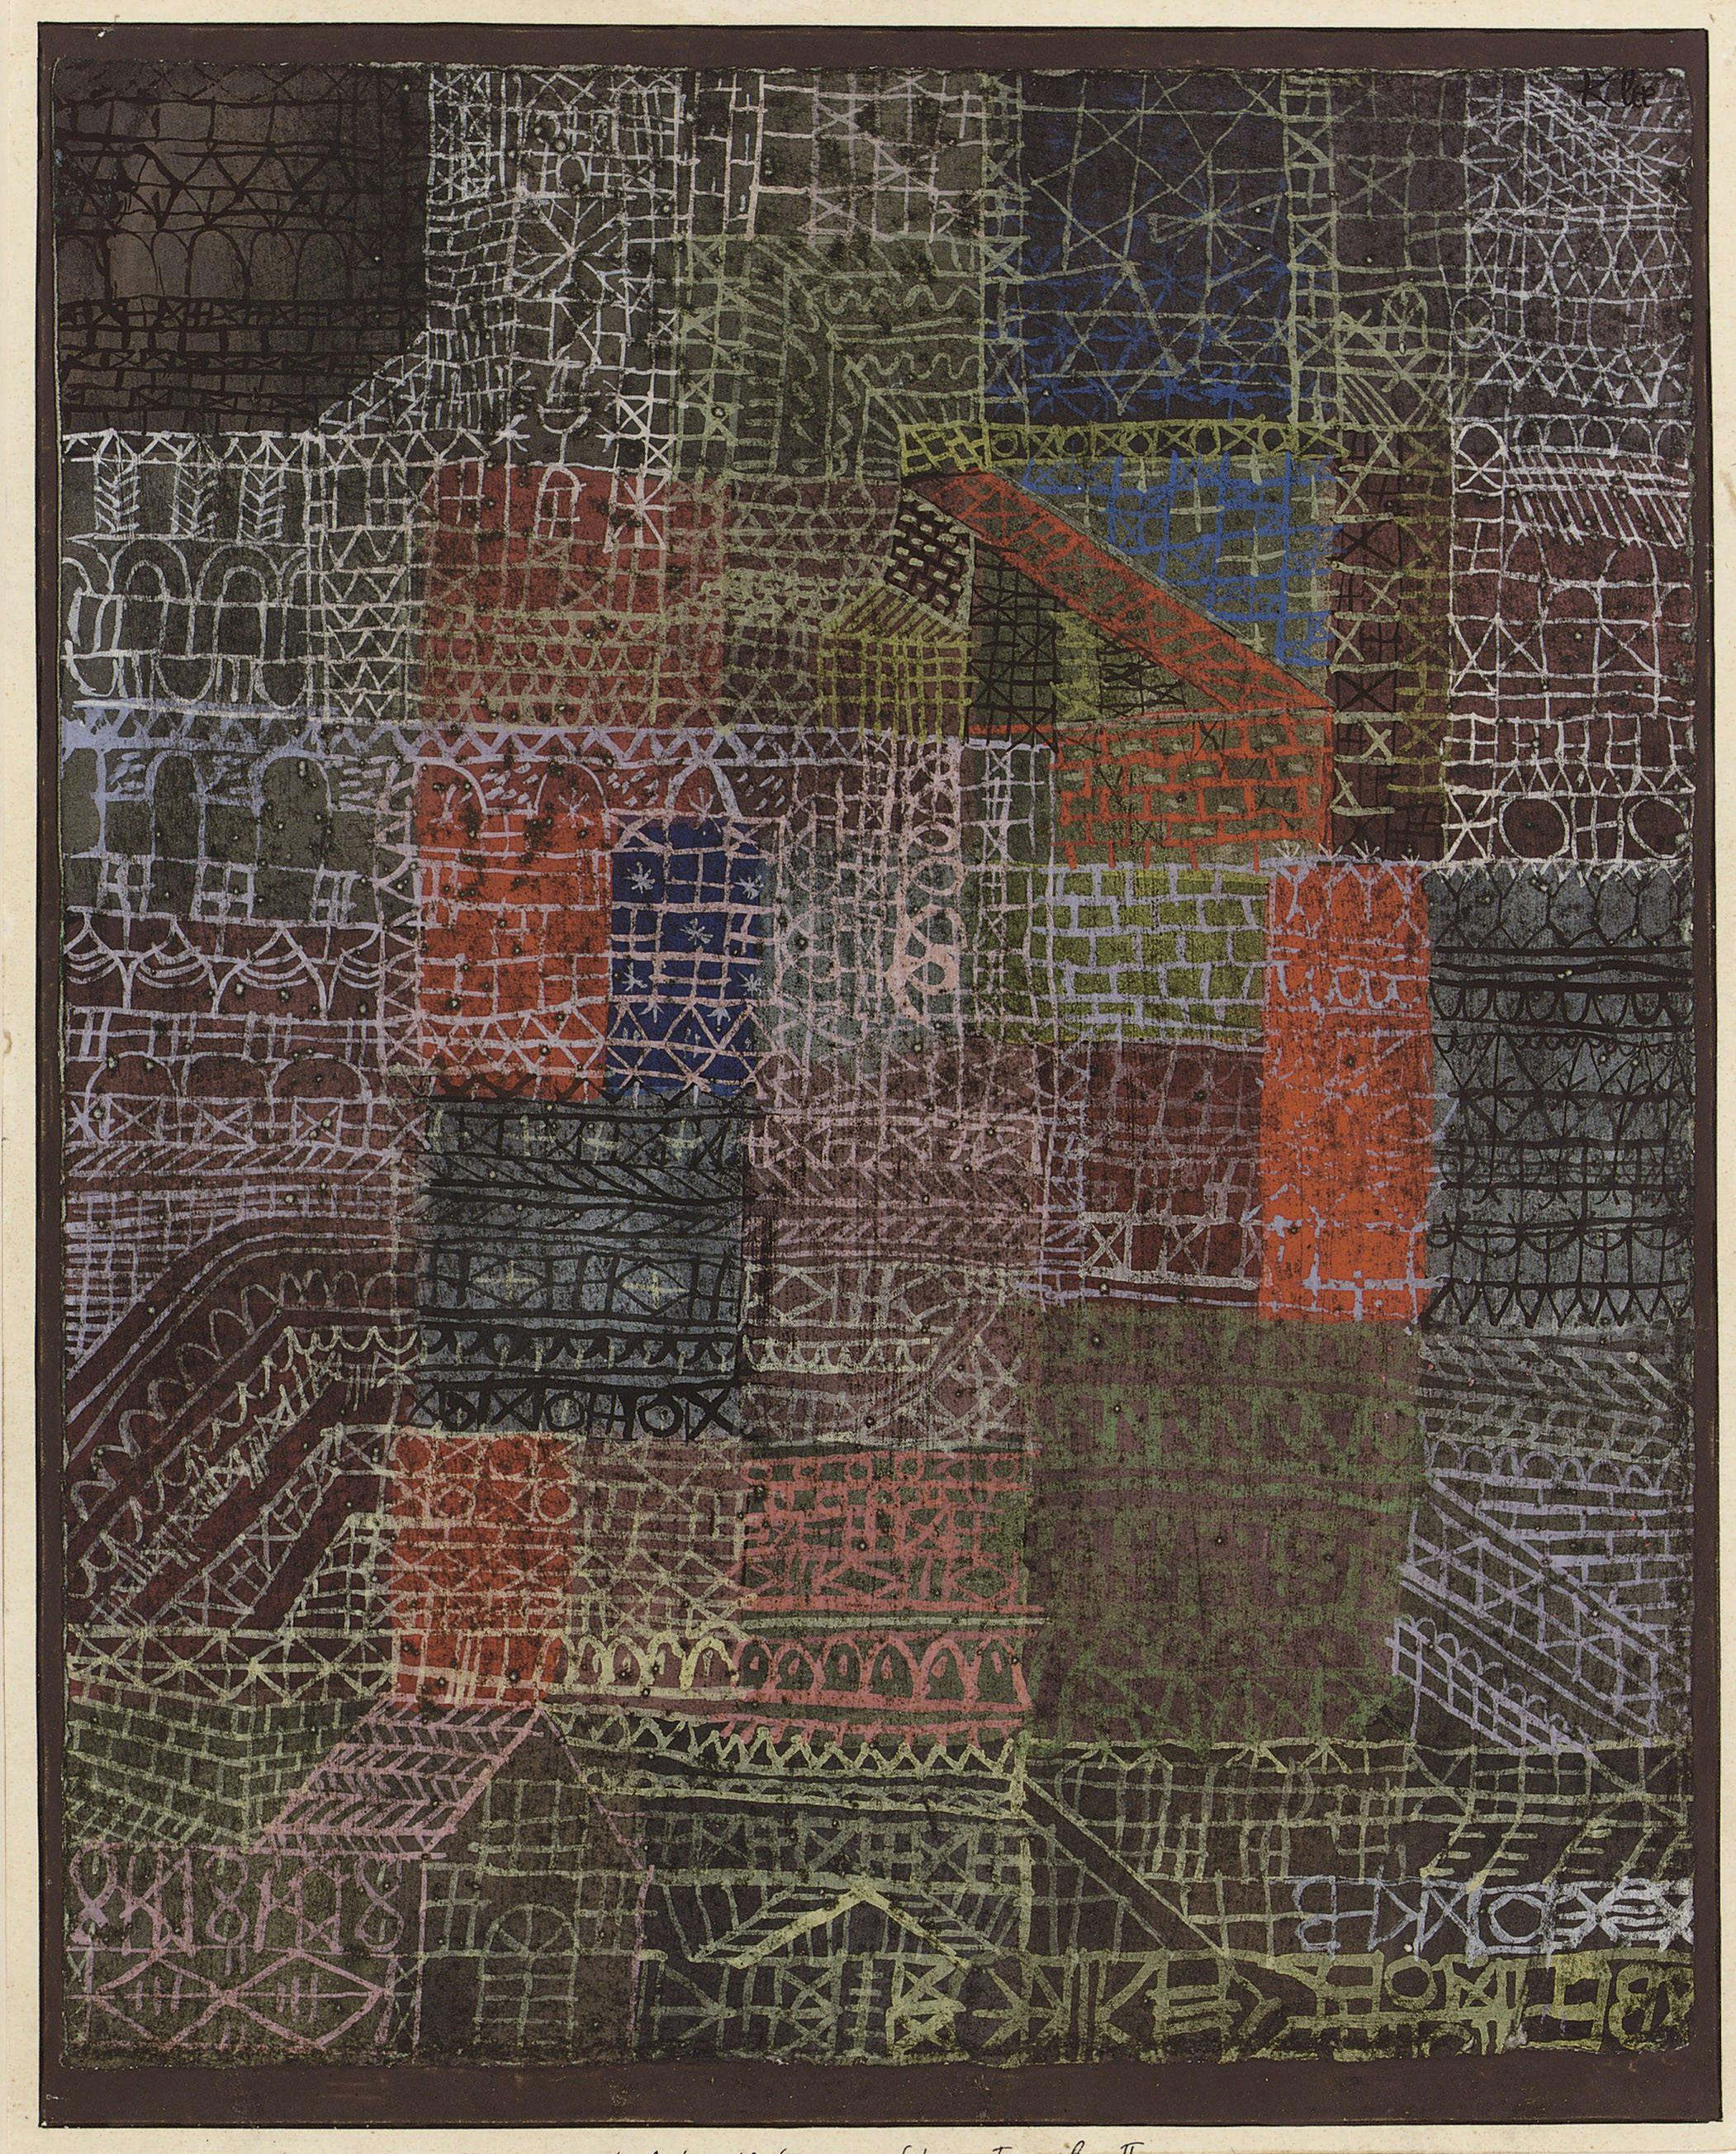 Paul Klee, Structural II, 1924